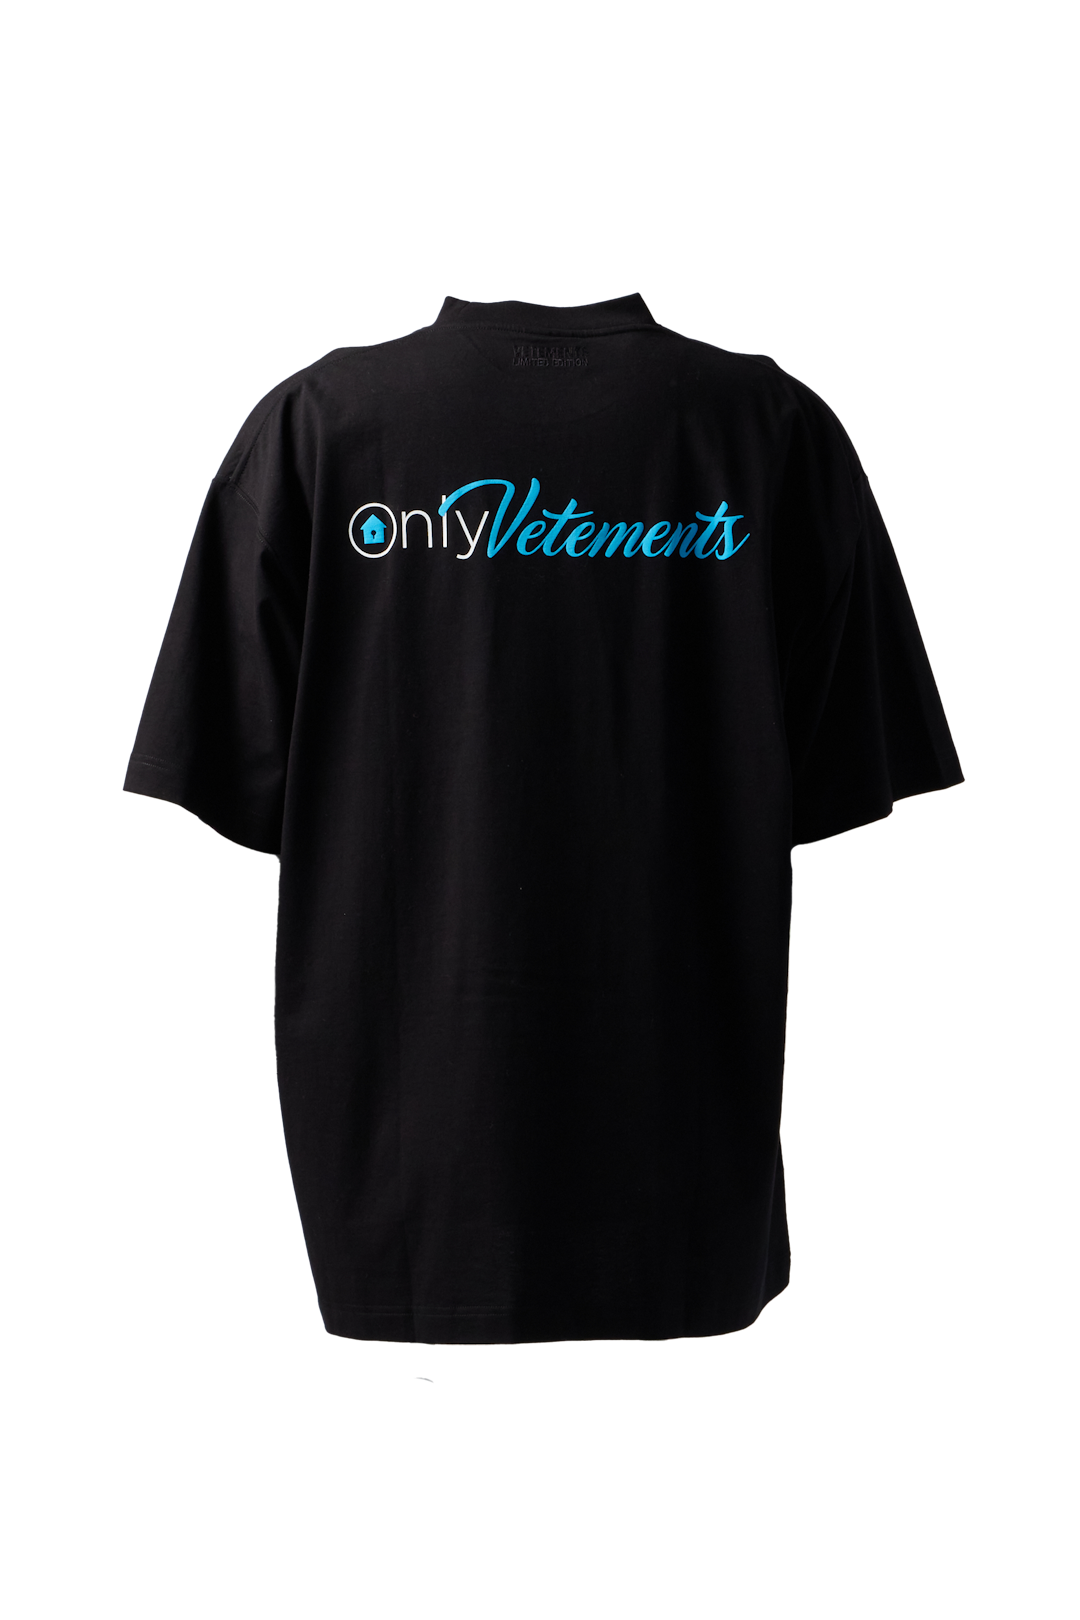 VETEMENTS - Only Vetements T-Shirt product image